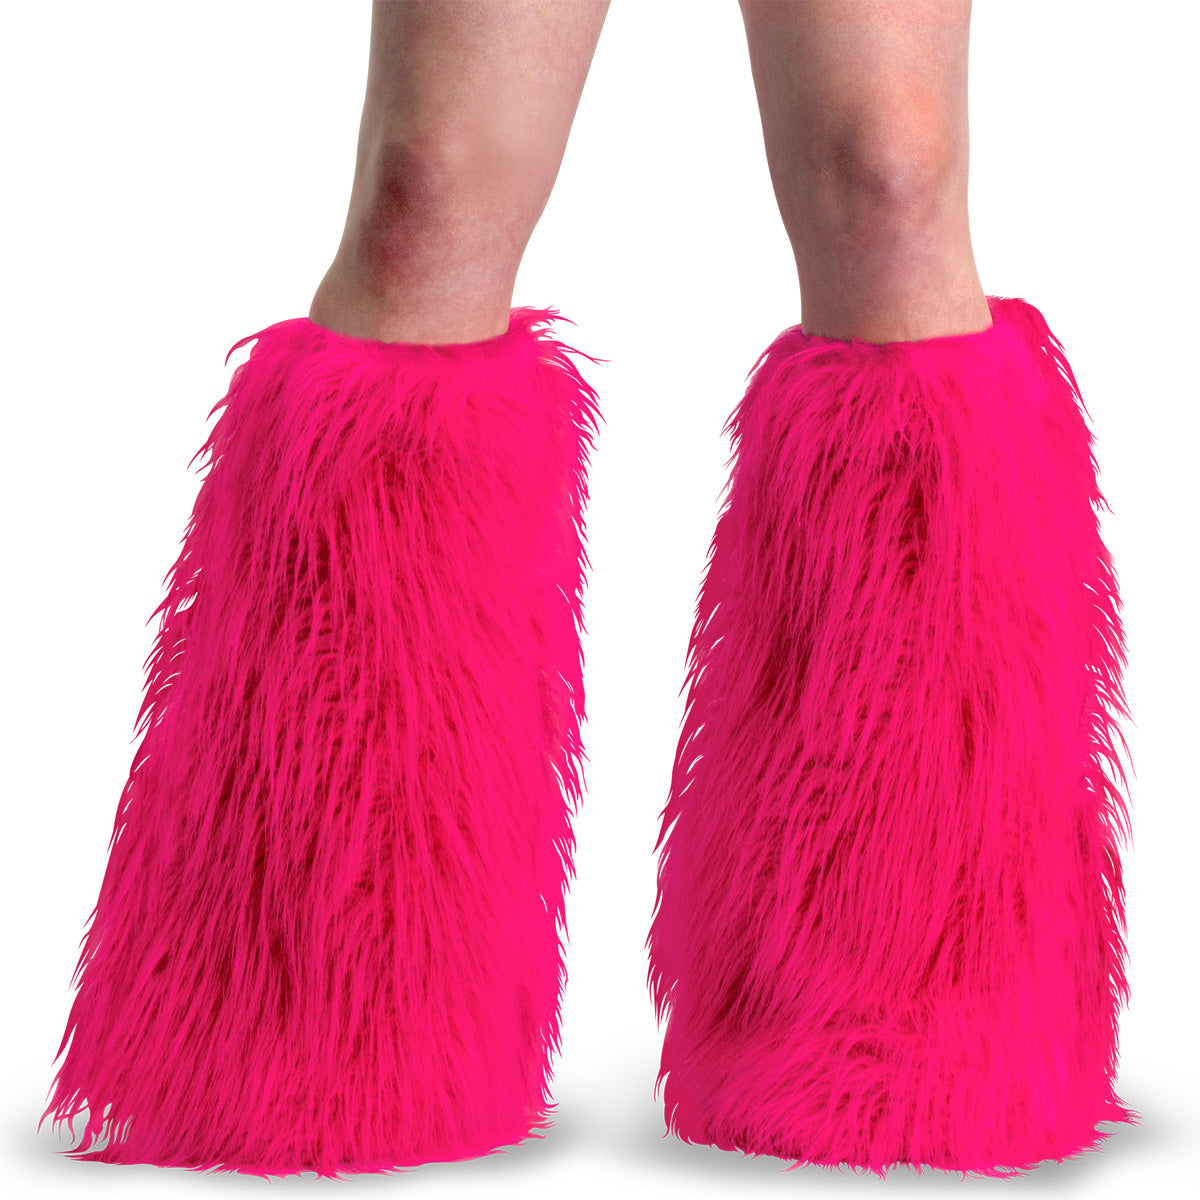 Adult Hot Pink Faux Fur Boot Sleeve, Leg Warmer